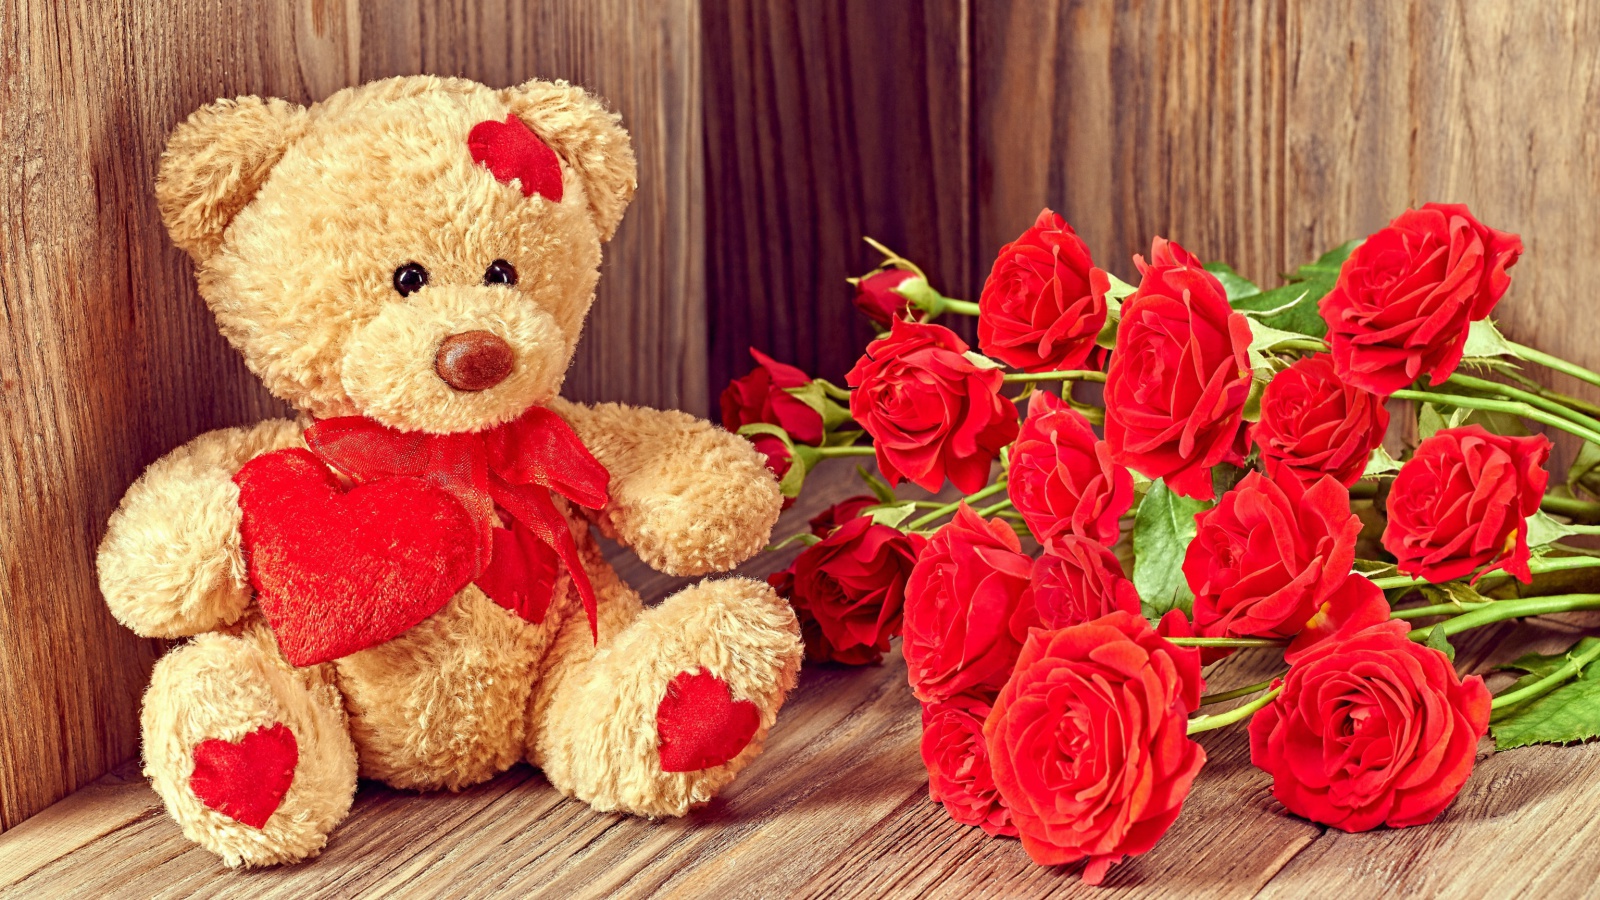 Das Brodwn Teddy Bear Gift for Saint Valentines Day Wallpaper 1600x900